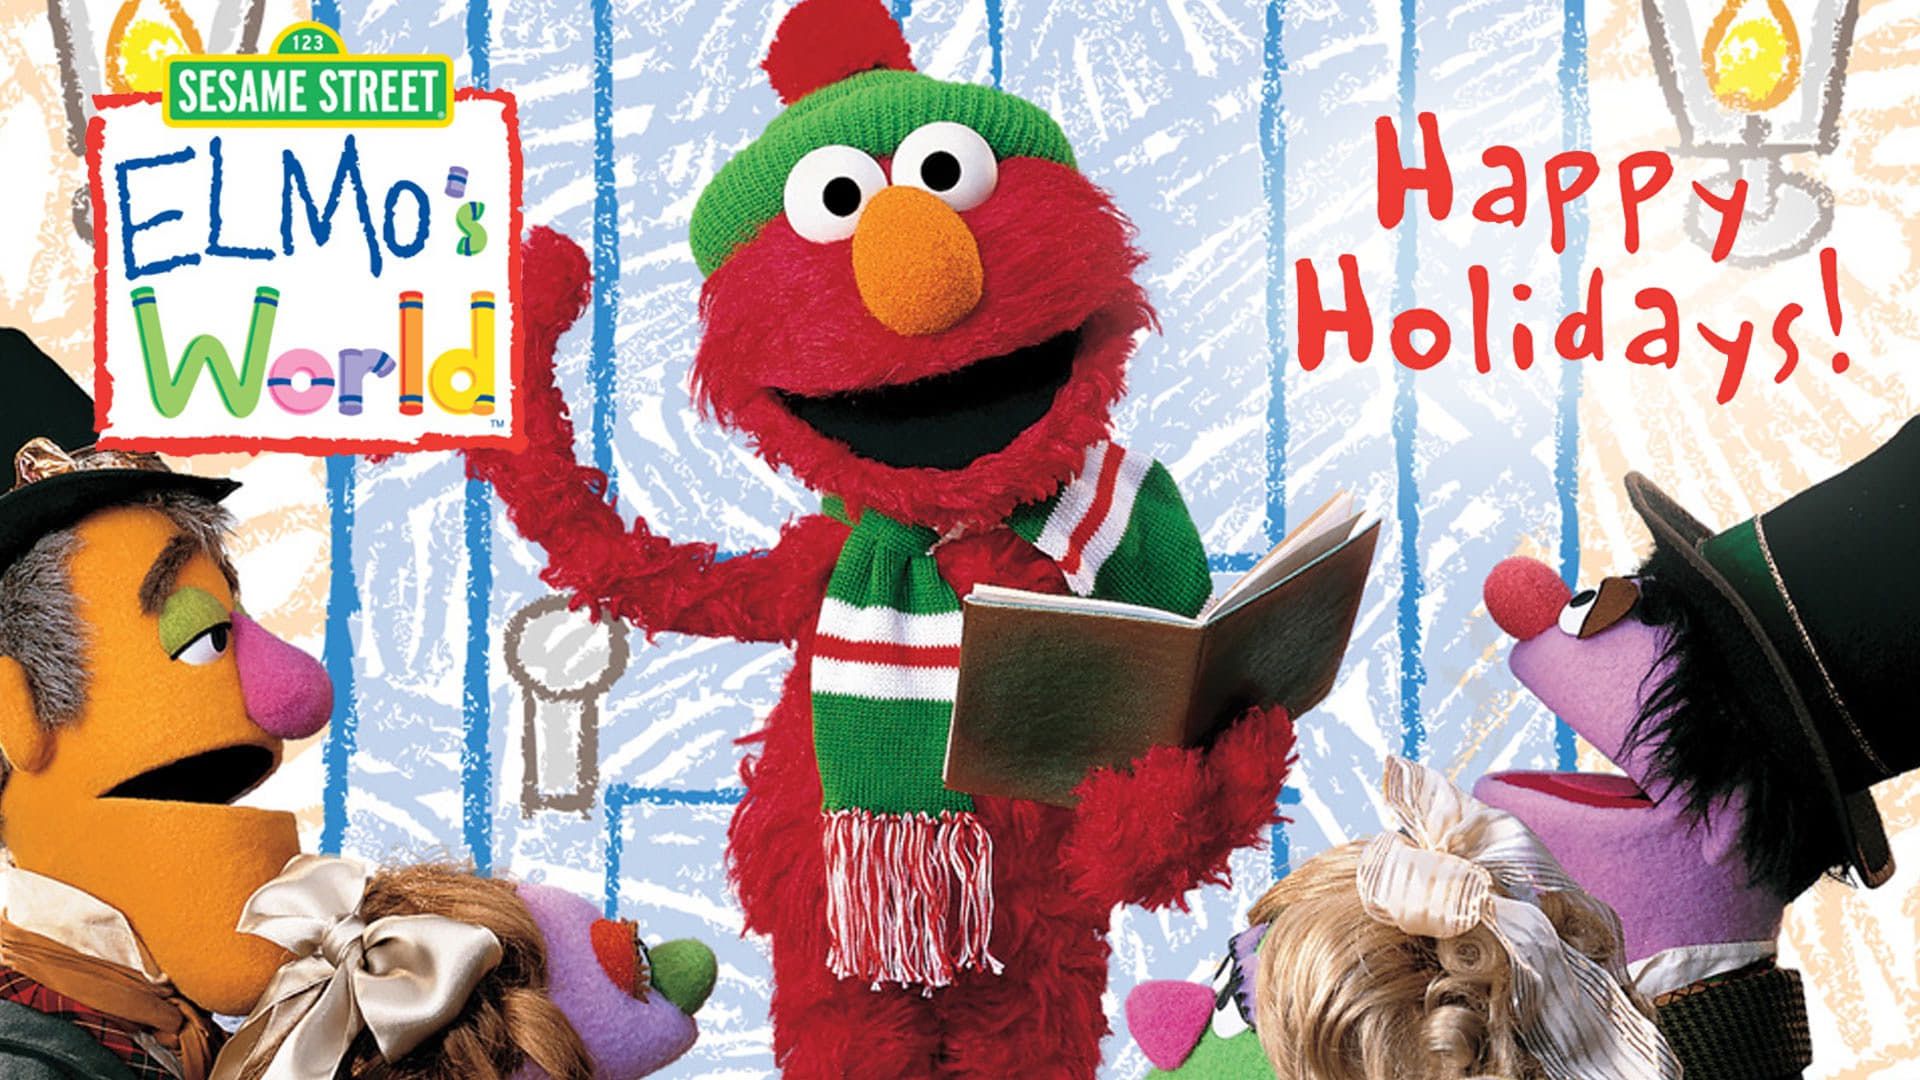 Elmo's World: Happy Holidays! background